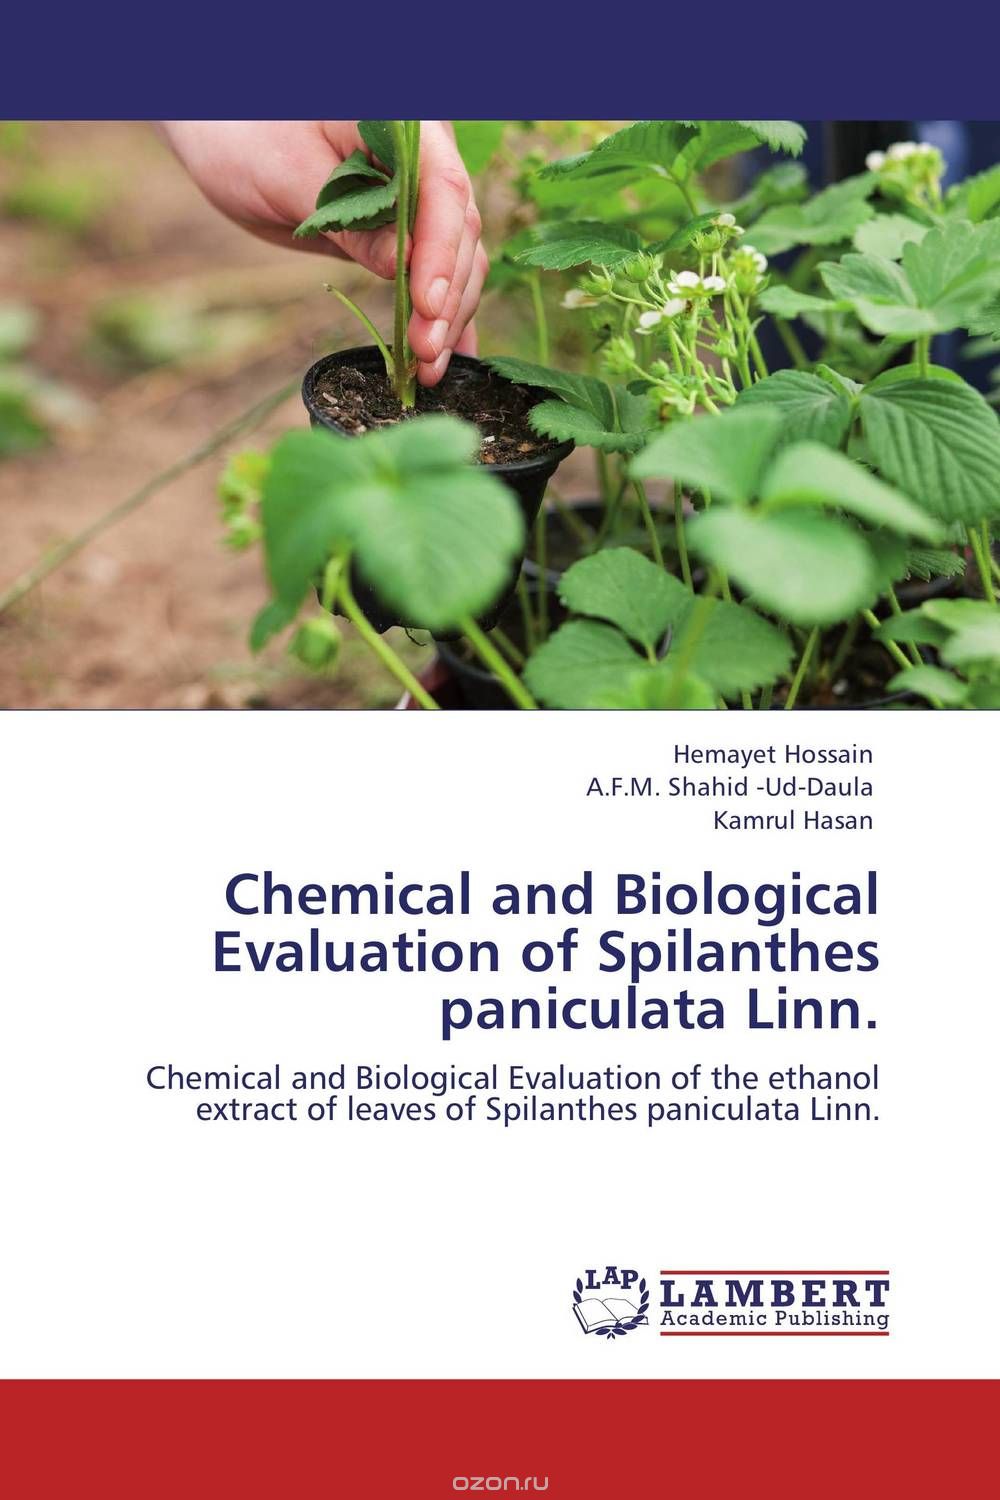 Скачать книгу "Chemical and Biological Evaluation of Spilanthes paniculata Linn."